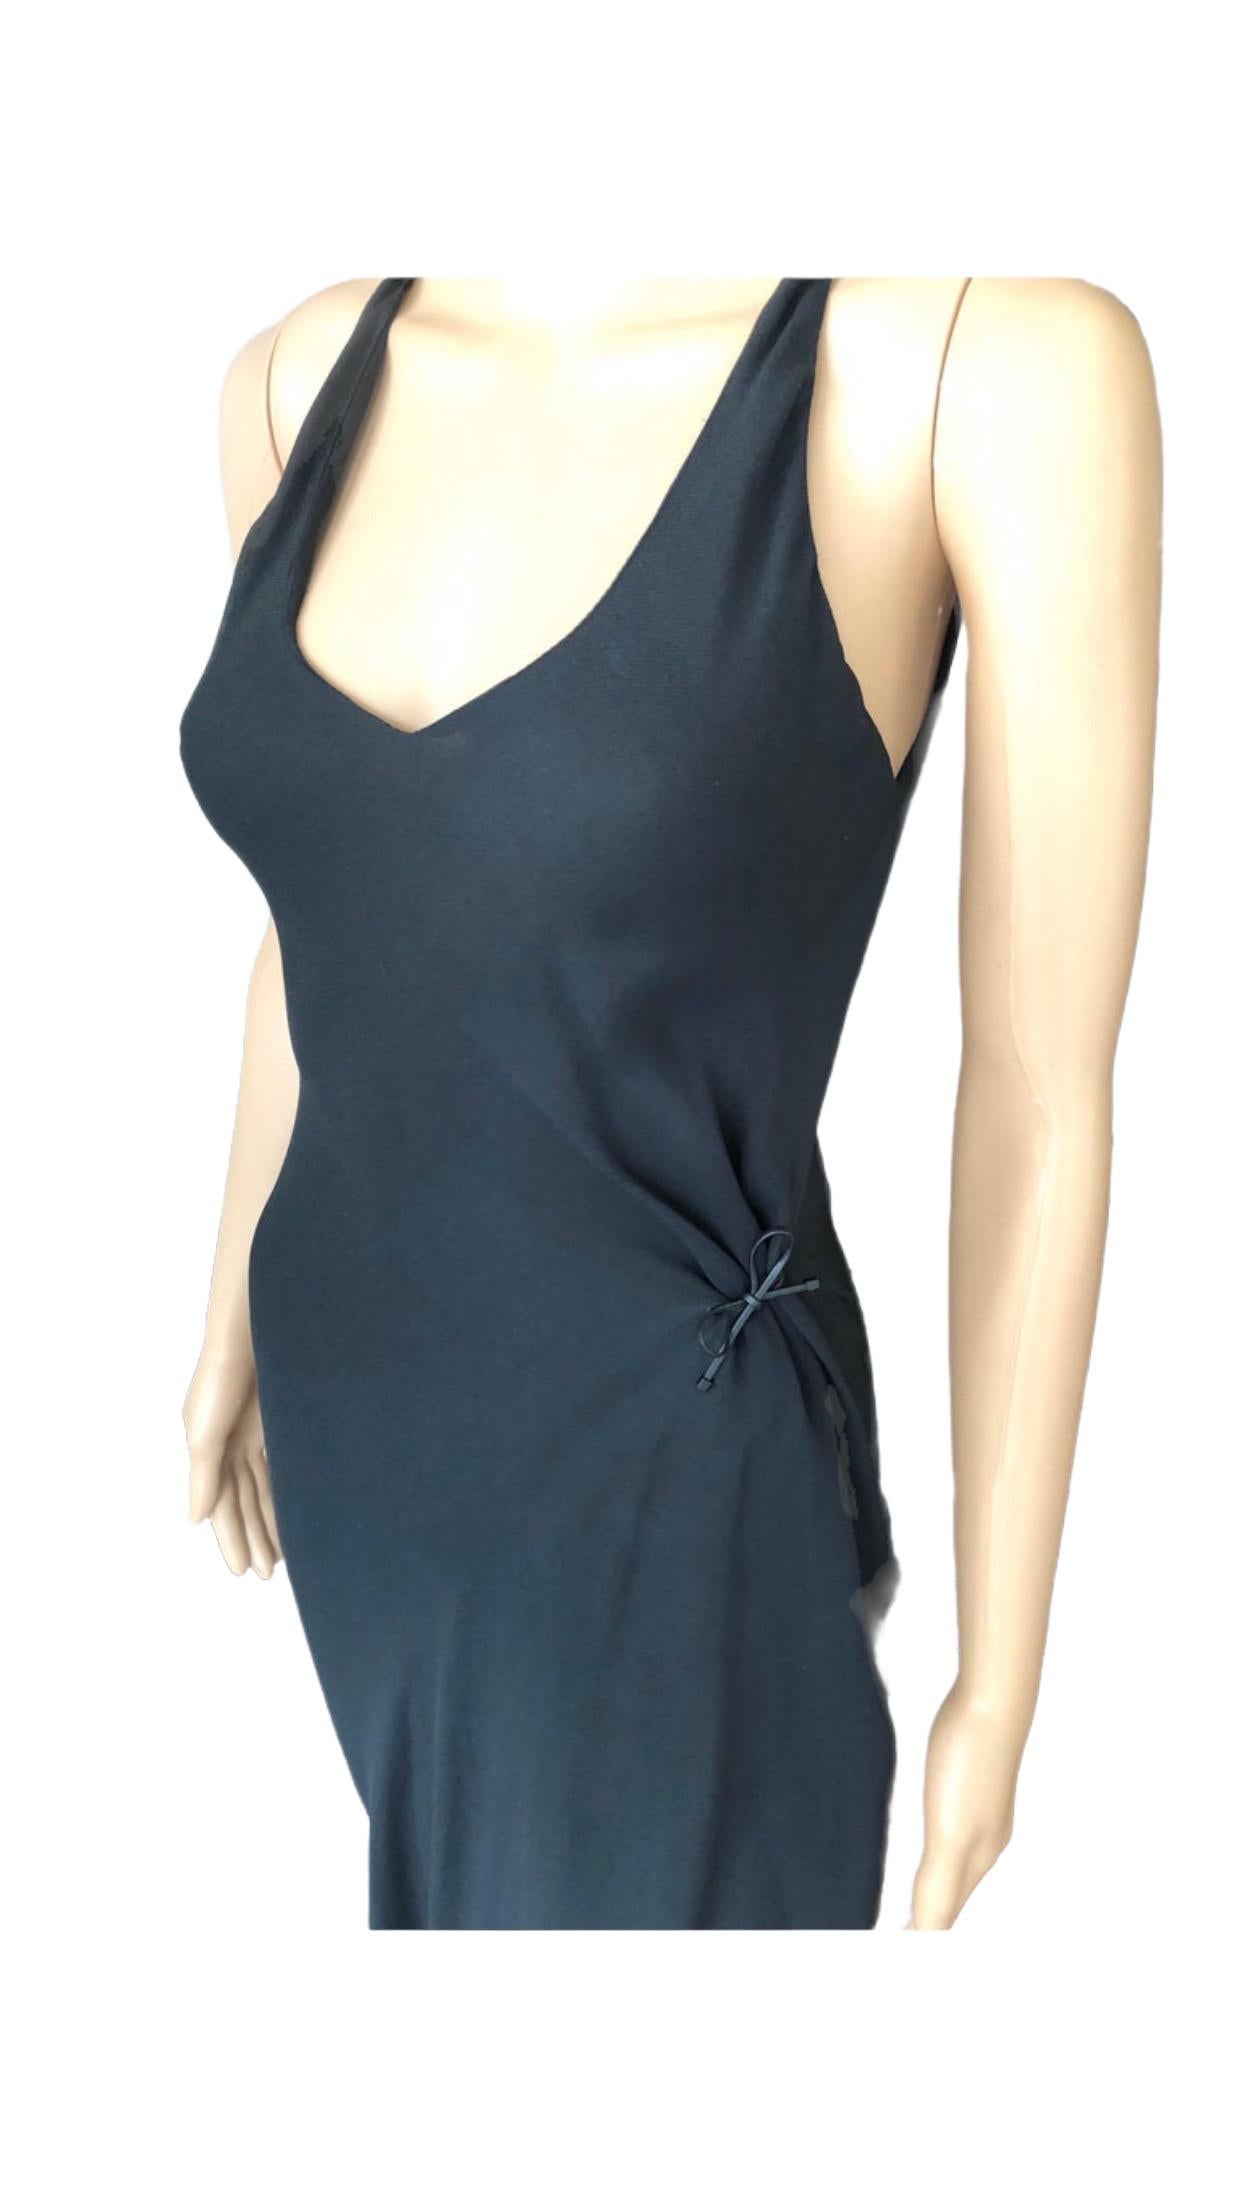 Tom Ford for Gucci c. 2000 Sheer Silk Black Maxi Evening Dress 5